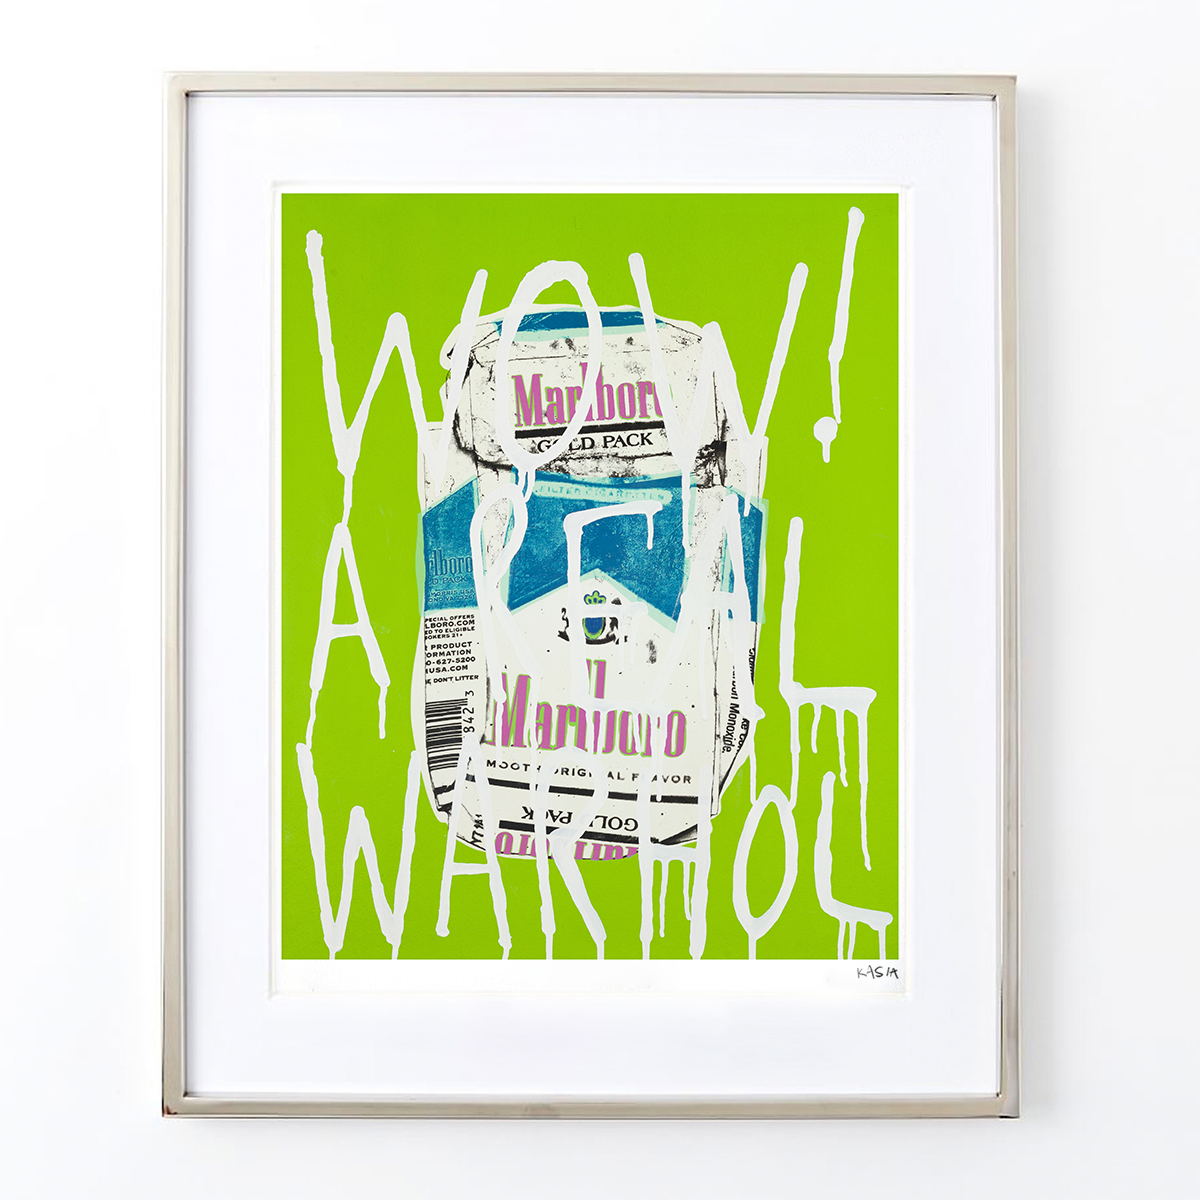 WOW! A Real Warhol